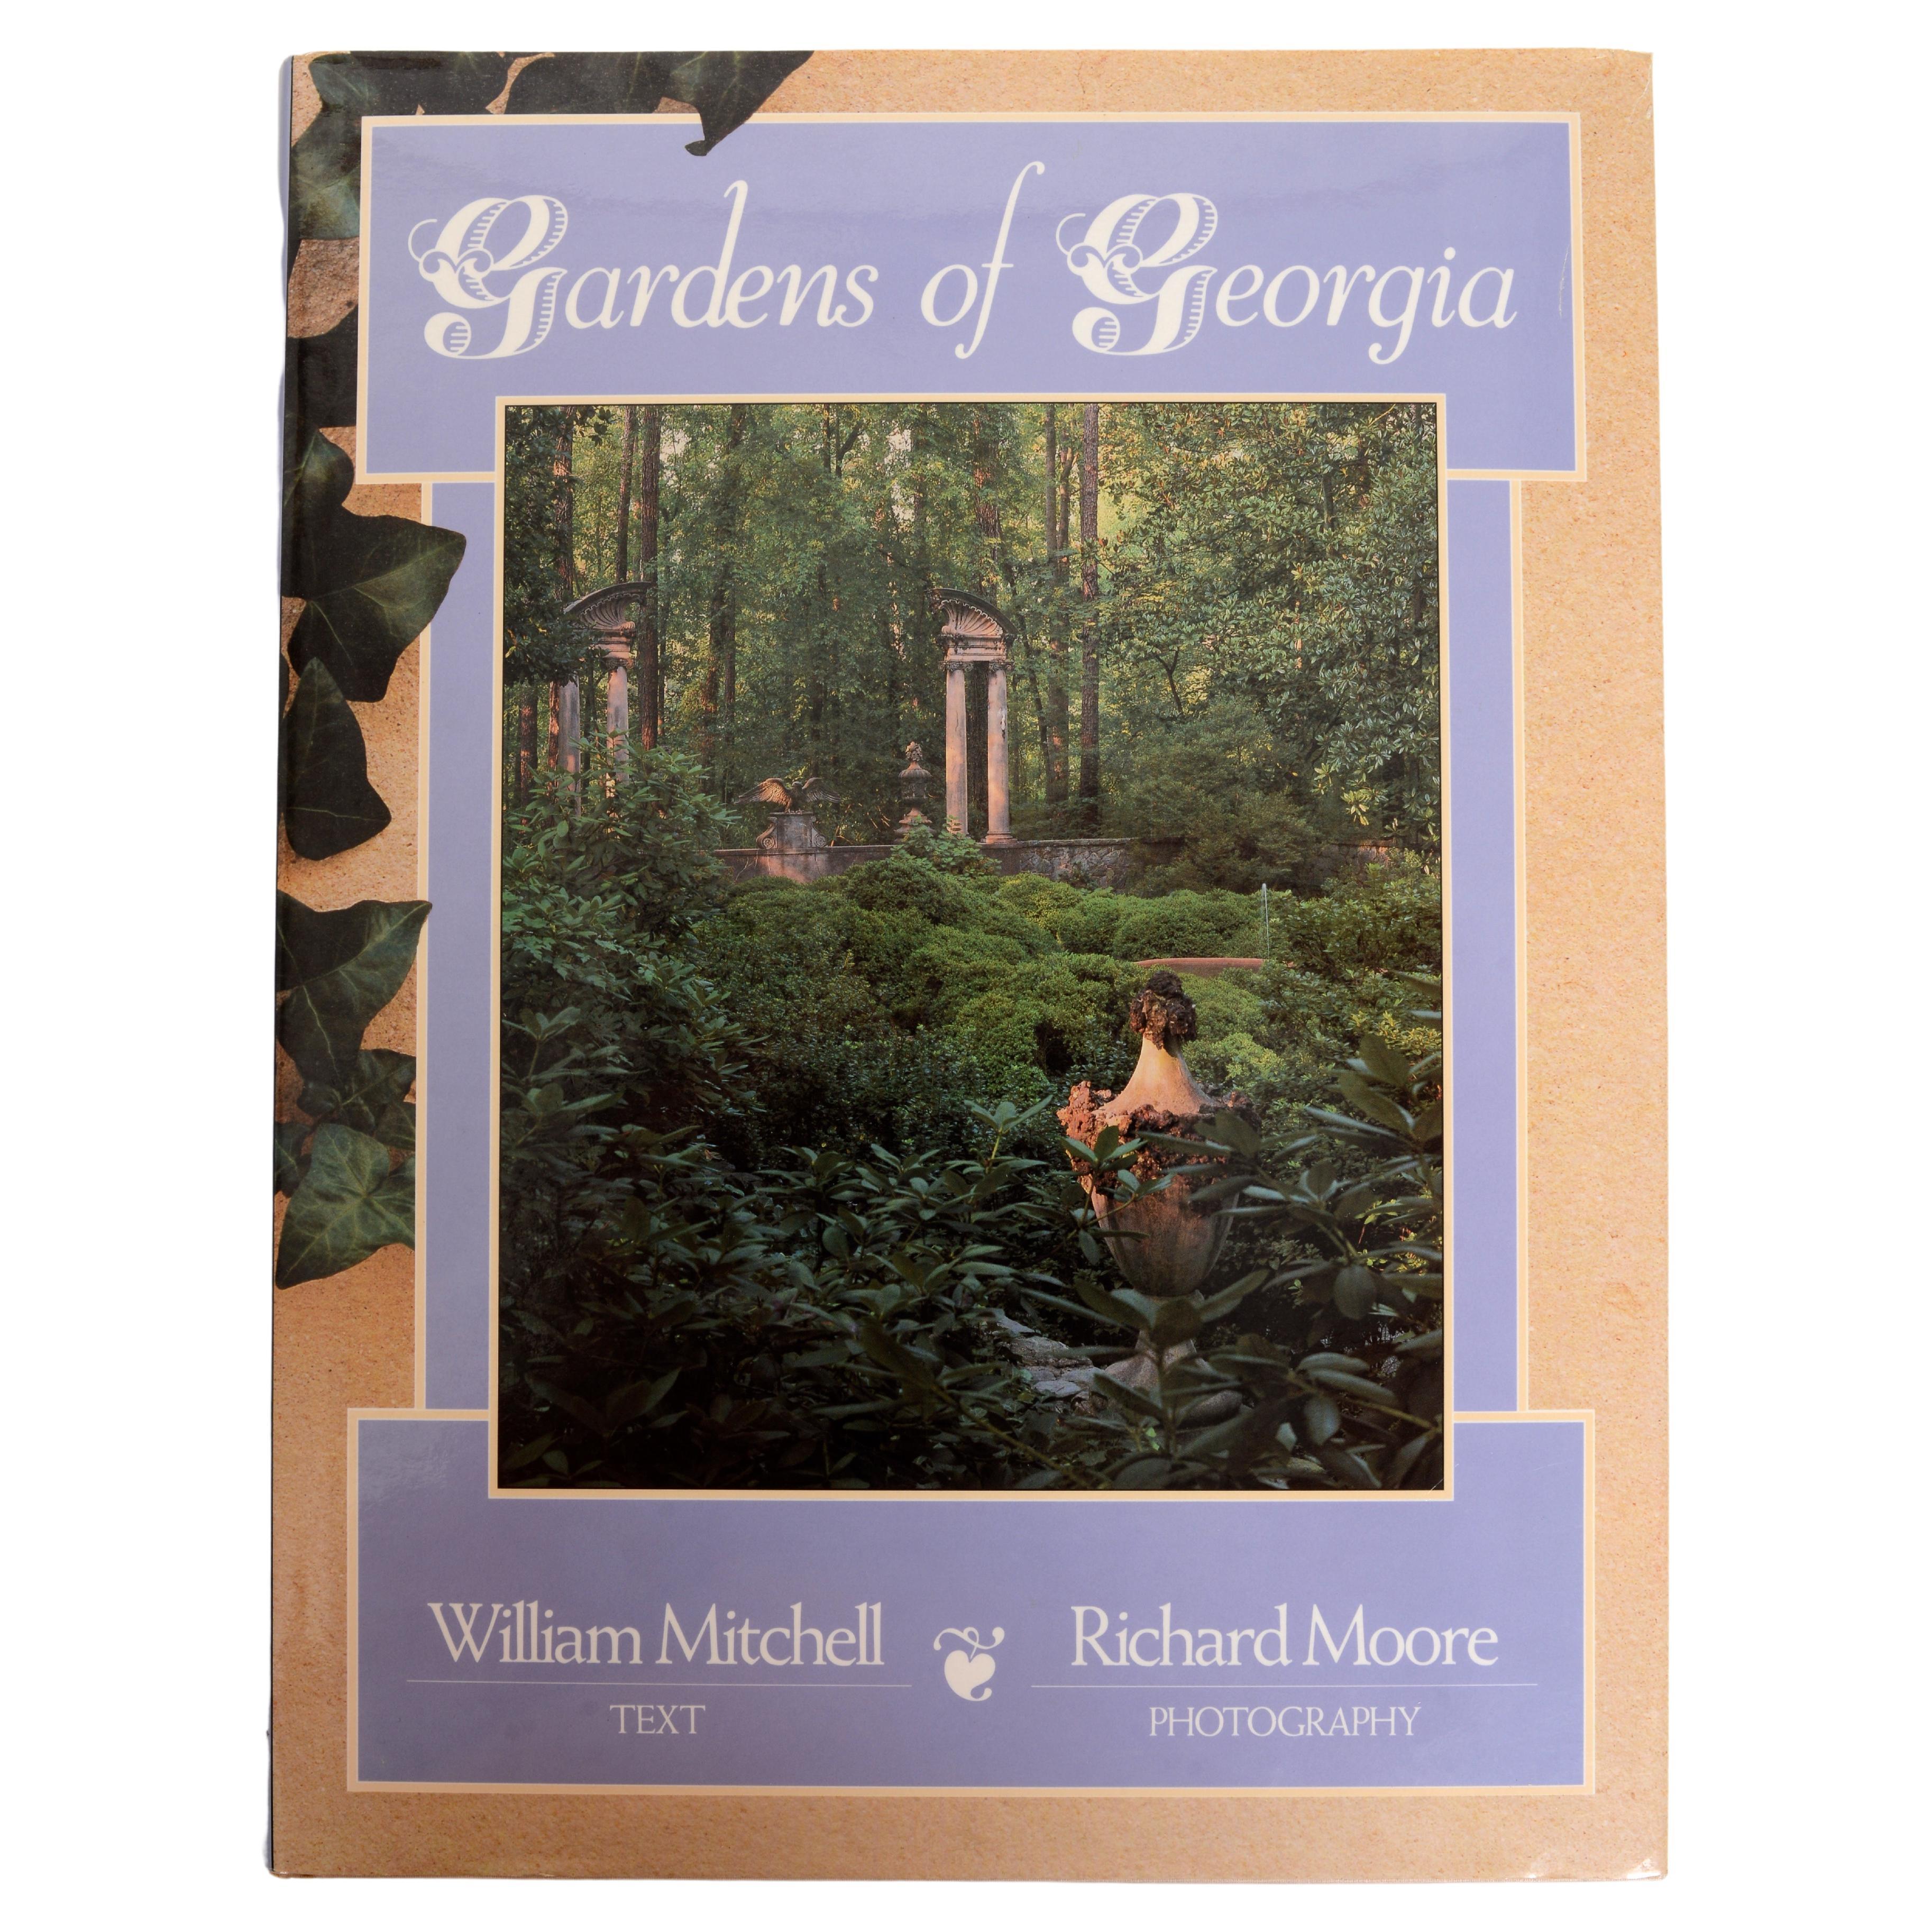 « Gardens of Georgia » de William R. Mitchell, édition spéciale limitée